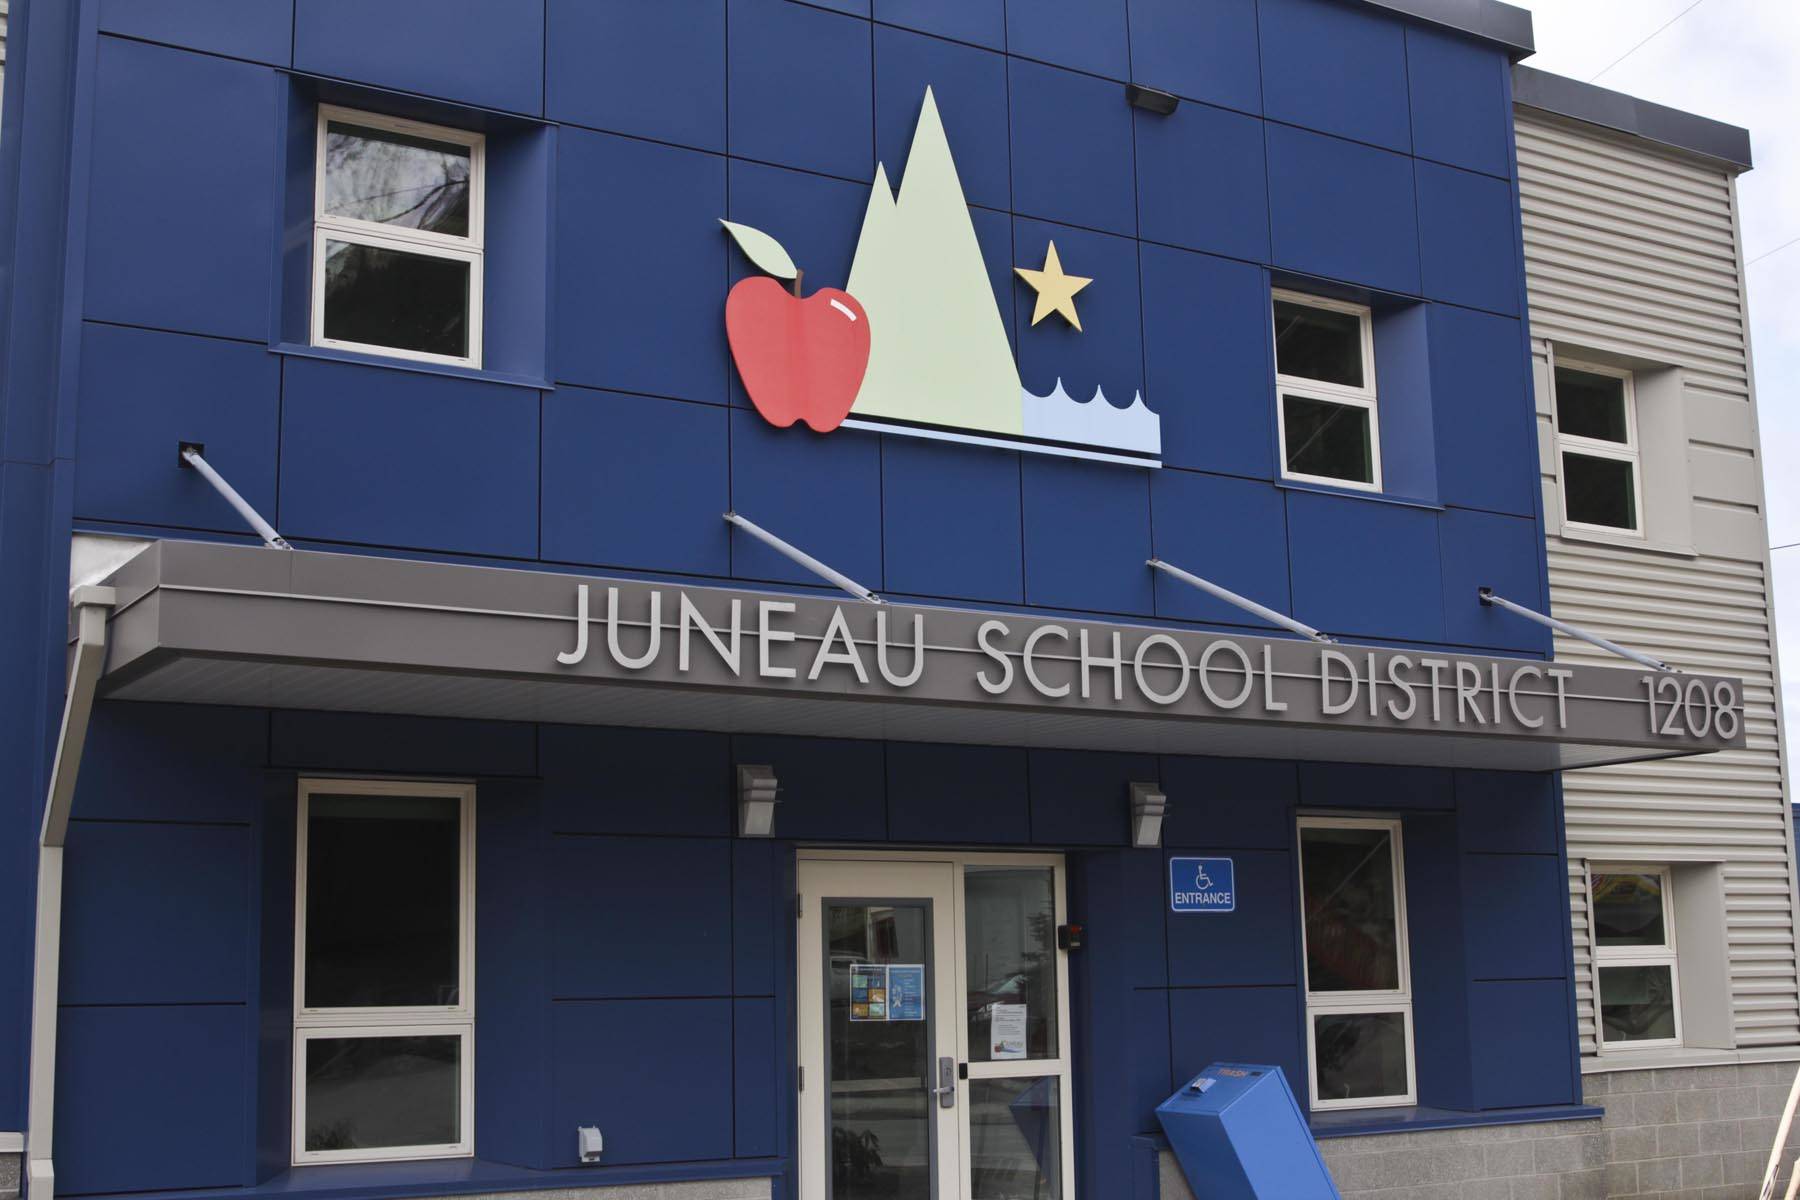 The Juneau School District building, March 20, 2020. (Michael S. Lockett | Juneau Empire)